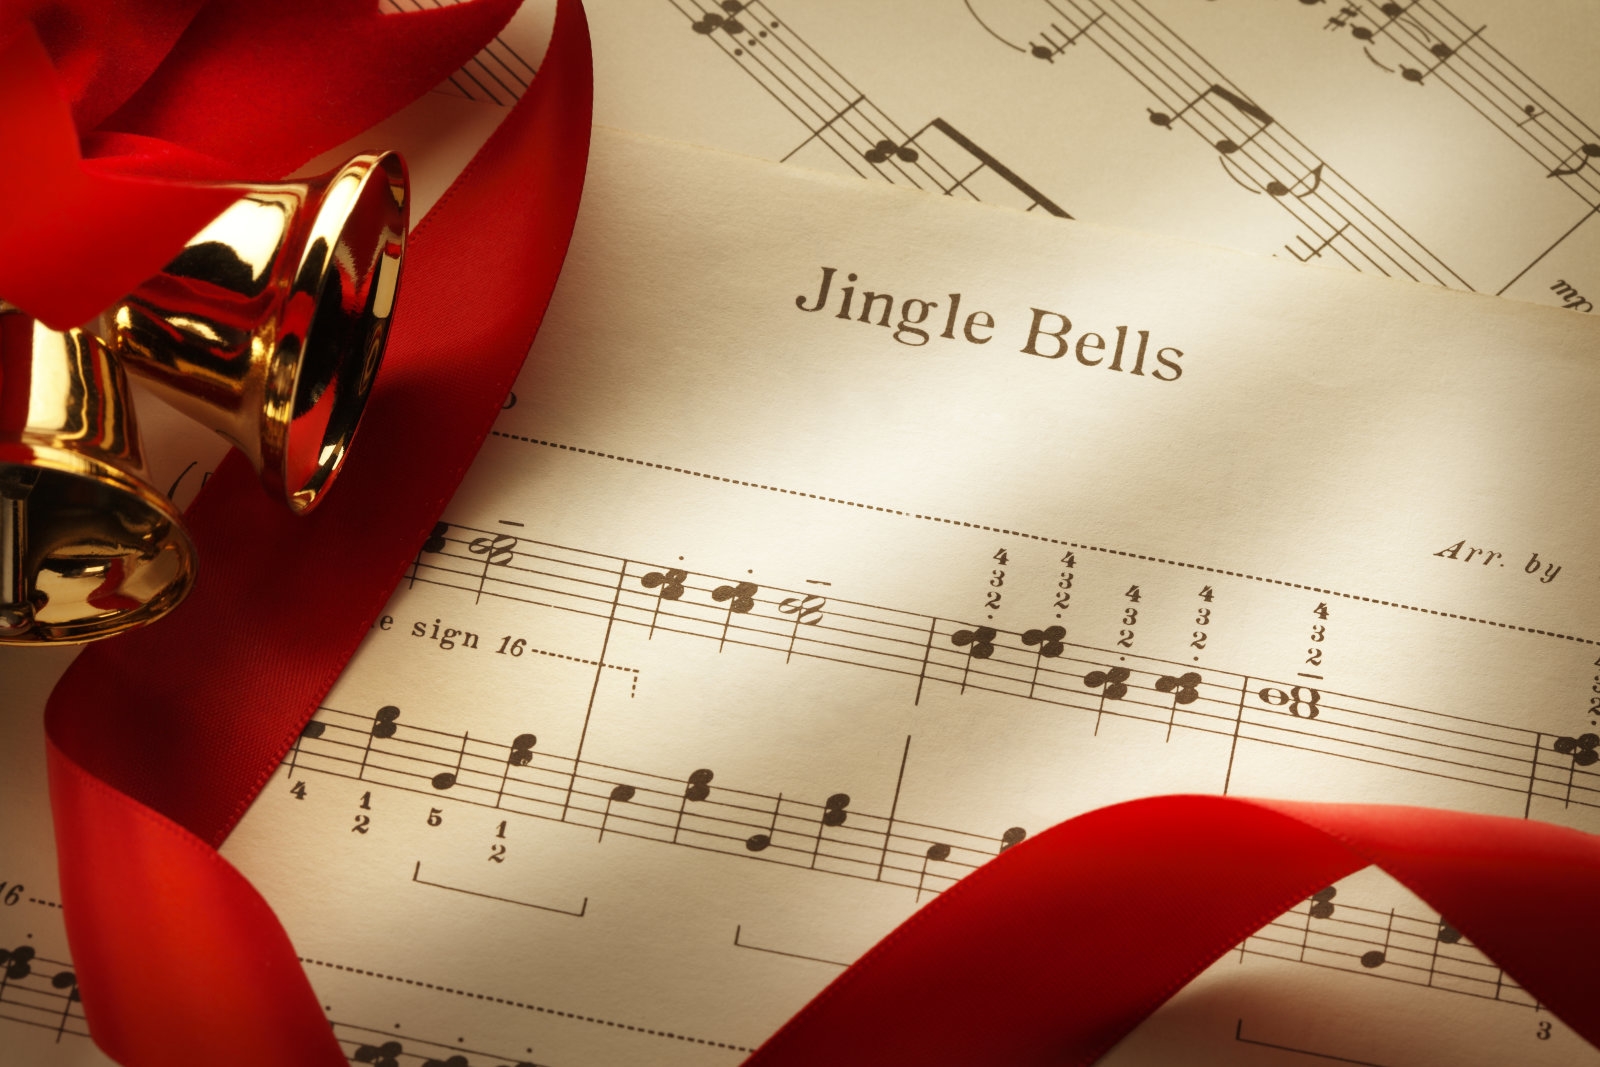 Listen to a 1950s era computer sing 'Jingle Bells' | DeviceDaily.com